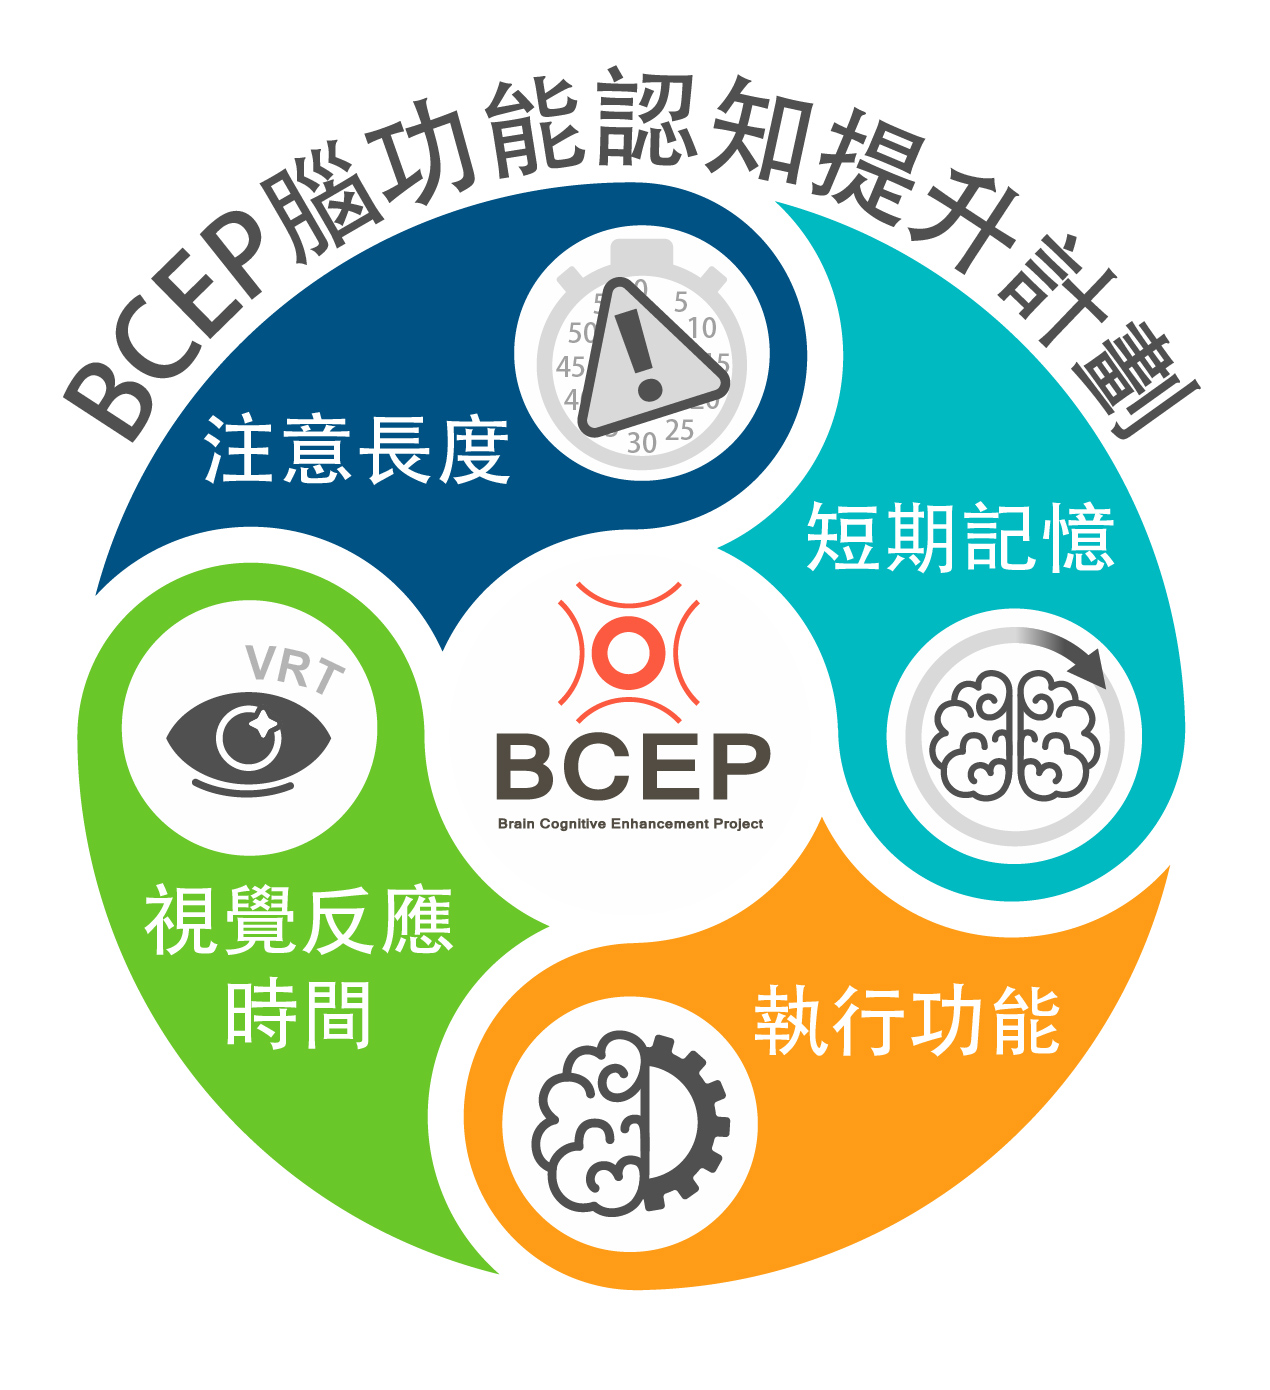 BCEP(Brain Cognitive Enhancement Project)腦功能認知提升計劃